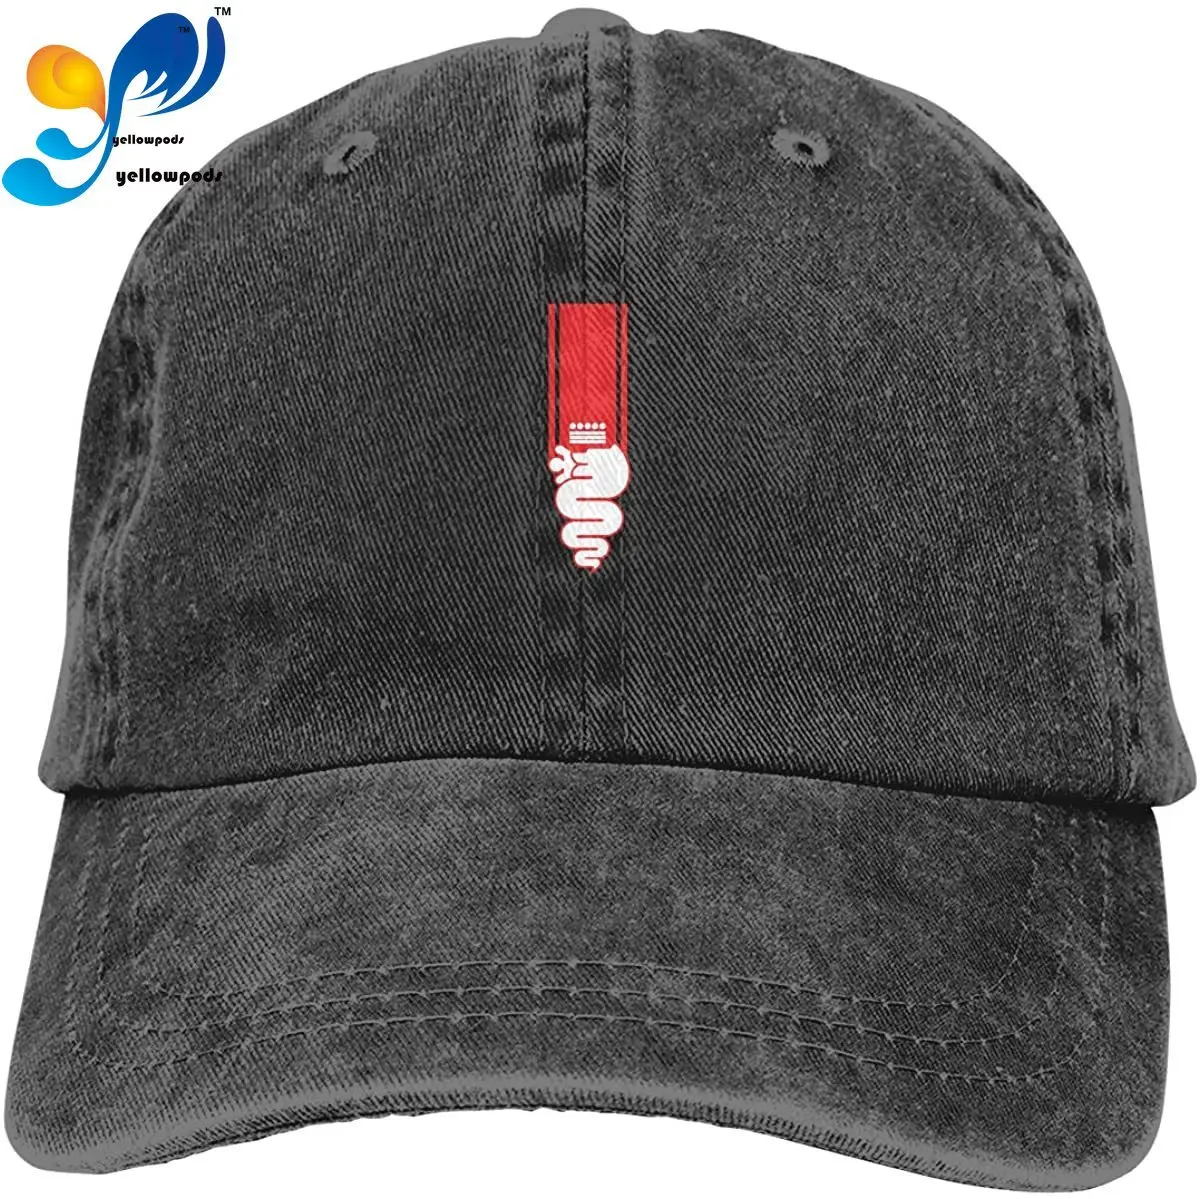 

AiFuShi Romeo Biscione (Network) Sports Denim Cap Adjustable Snapback Casquettes Unisex Plain Baseball Cowboy Hat Black